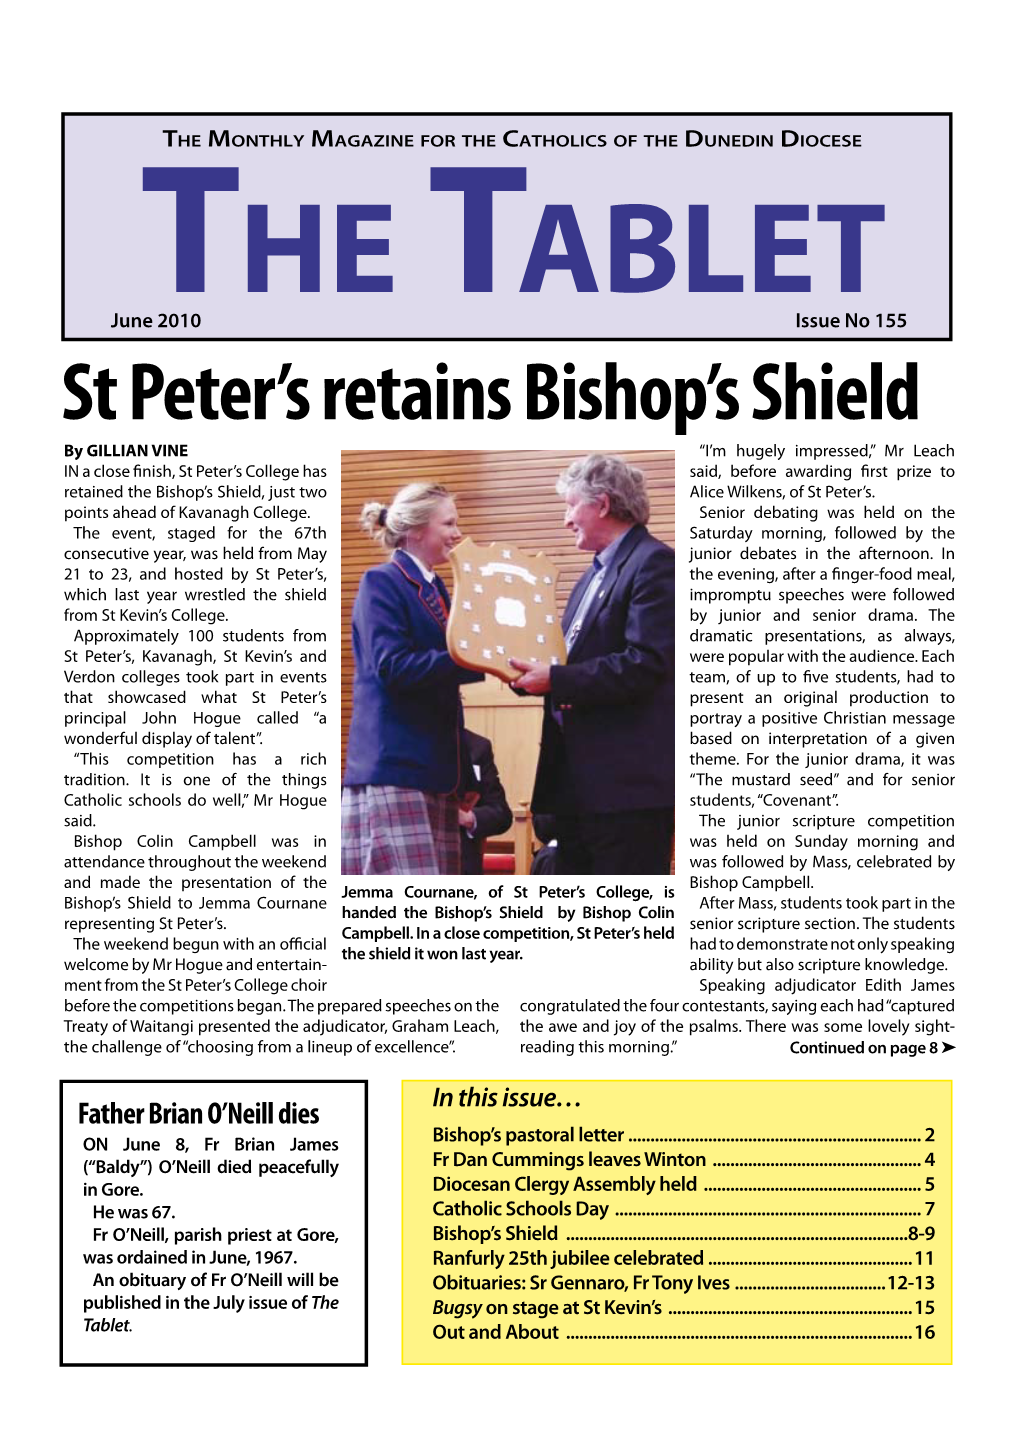 St Peter's Retains Bishop's Shield